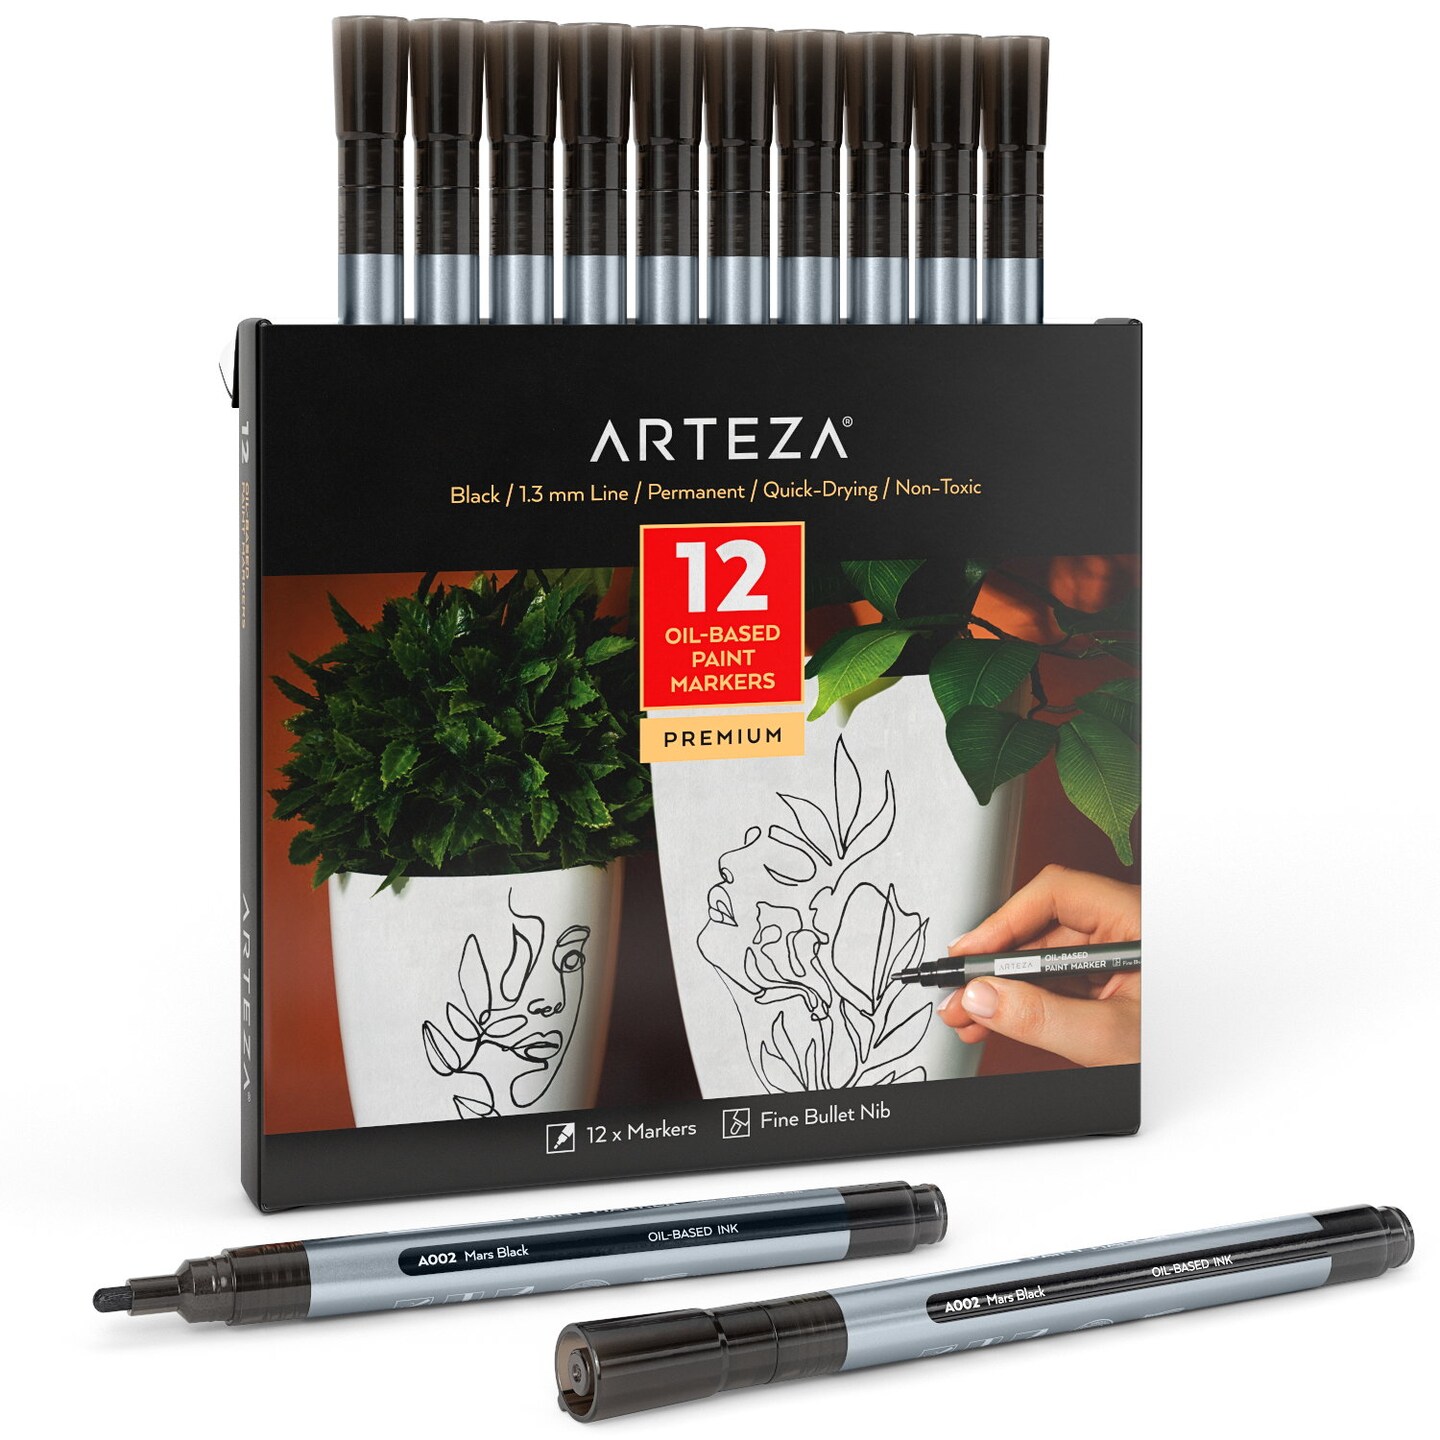 Sharpie® Oil-Based Paint Markers, Medium Point Metallic Set